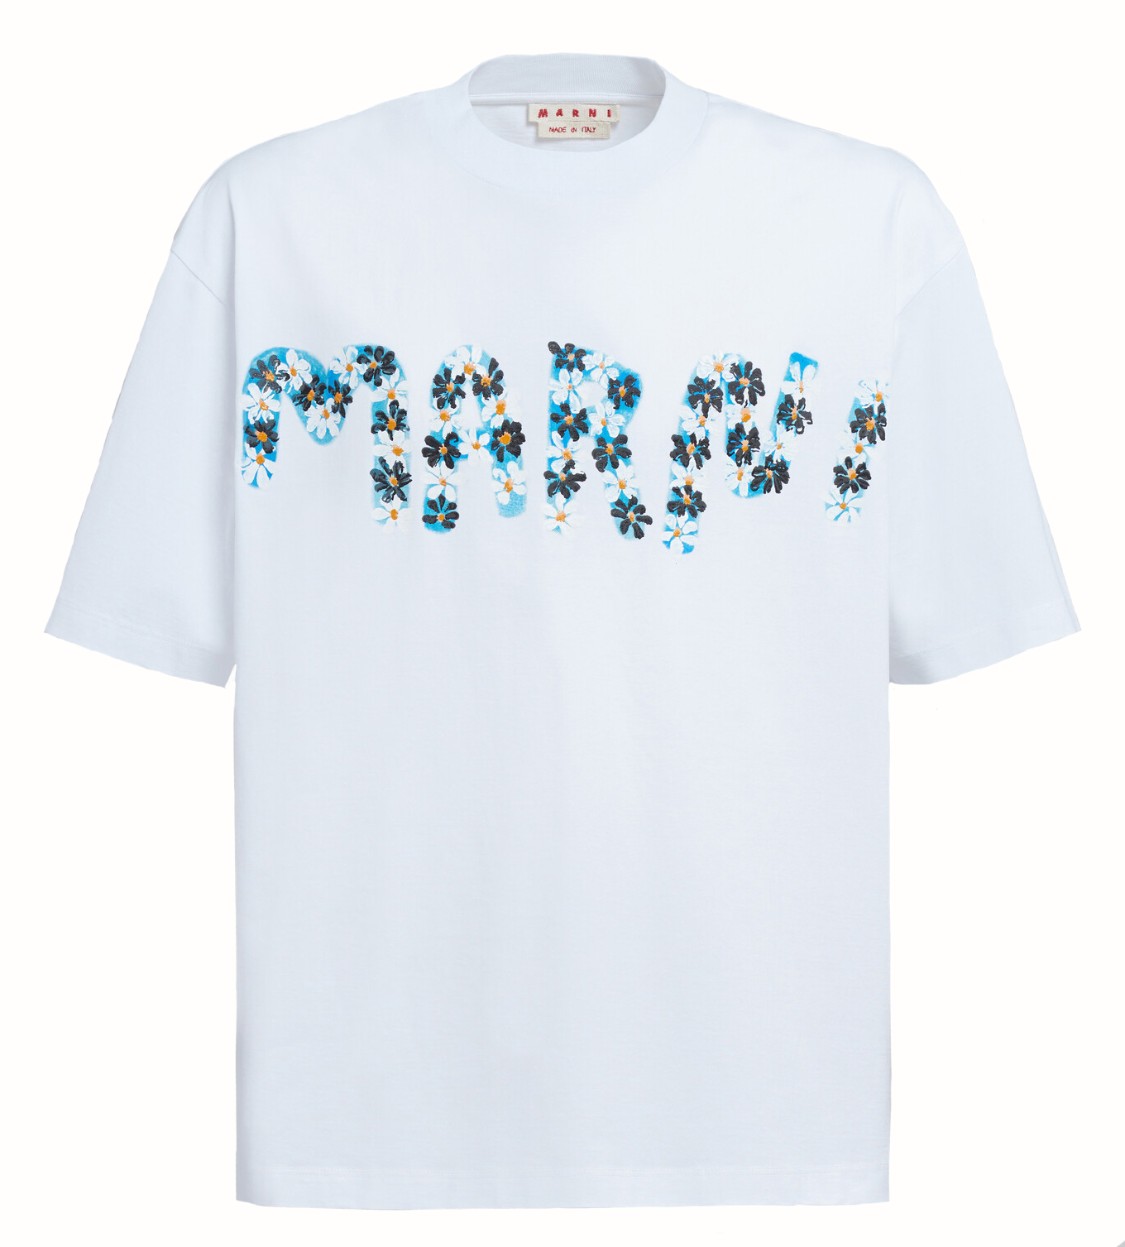 shop Marni  T-shirts: T-shirts Marni, oversize, manica corta, girocollo.

Composizione: 100% cotone. number 2398